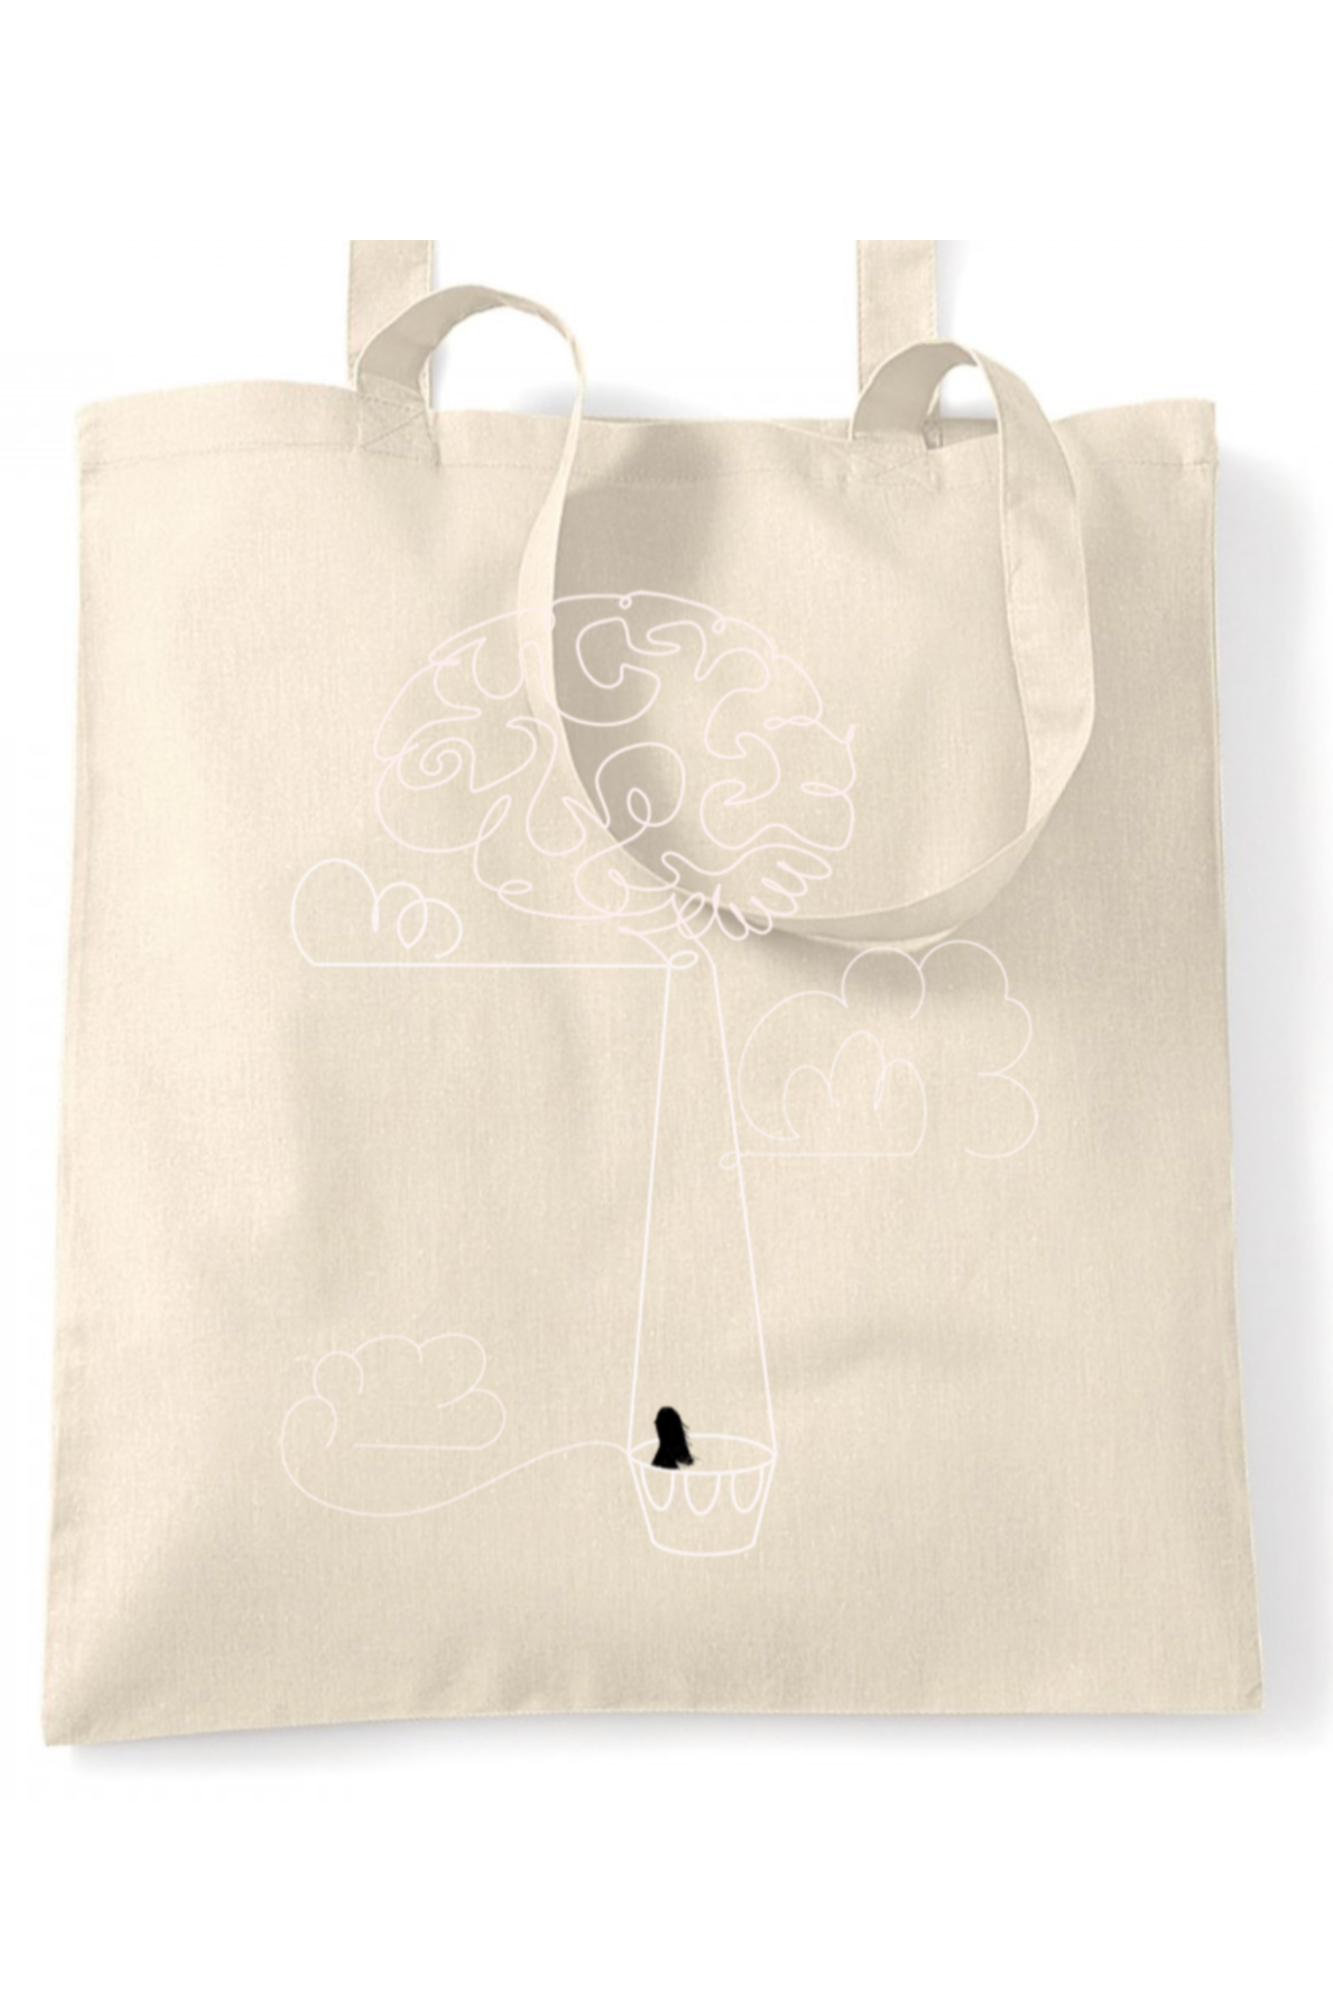 Tote bag : On a cloud